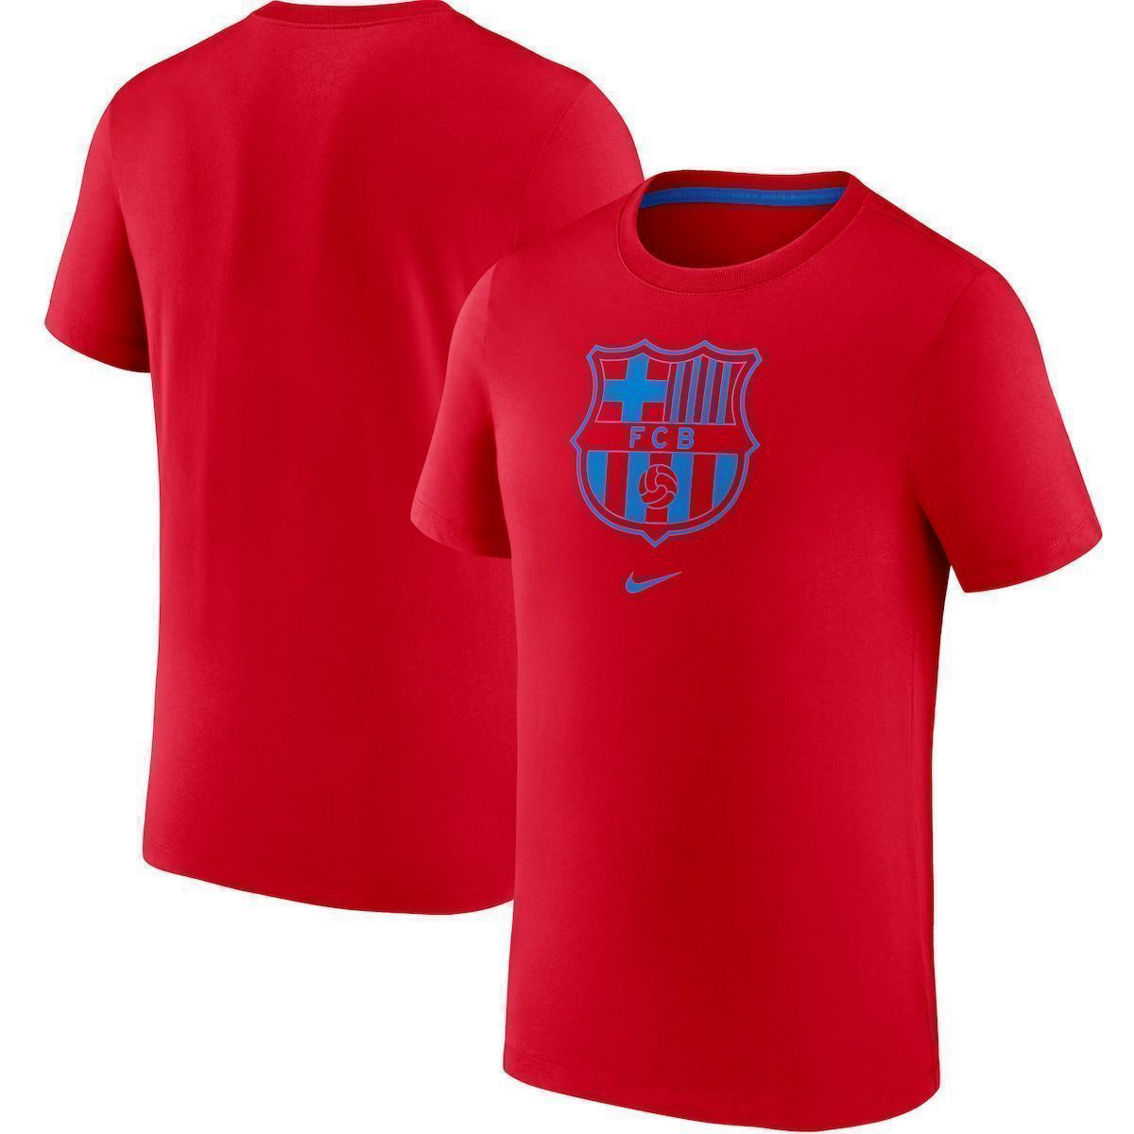 Nike Men's Red Barcelona Team Crest T-Shirt - Image 2 of 4